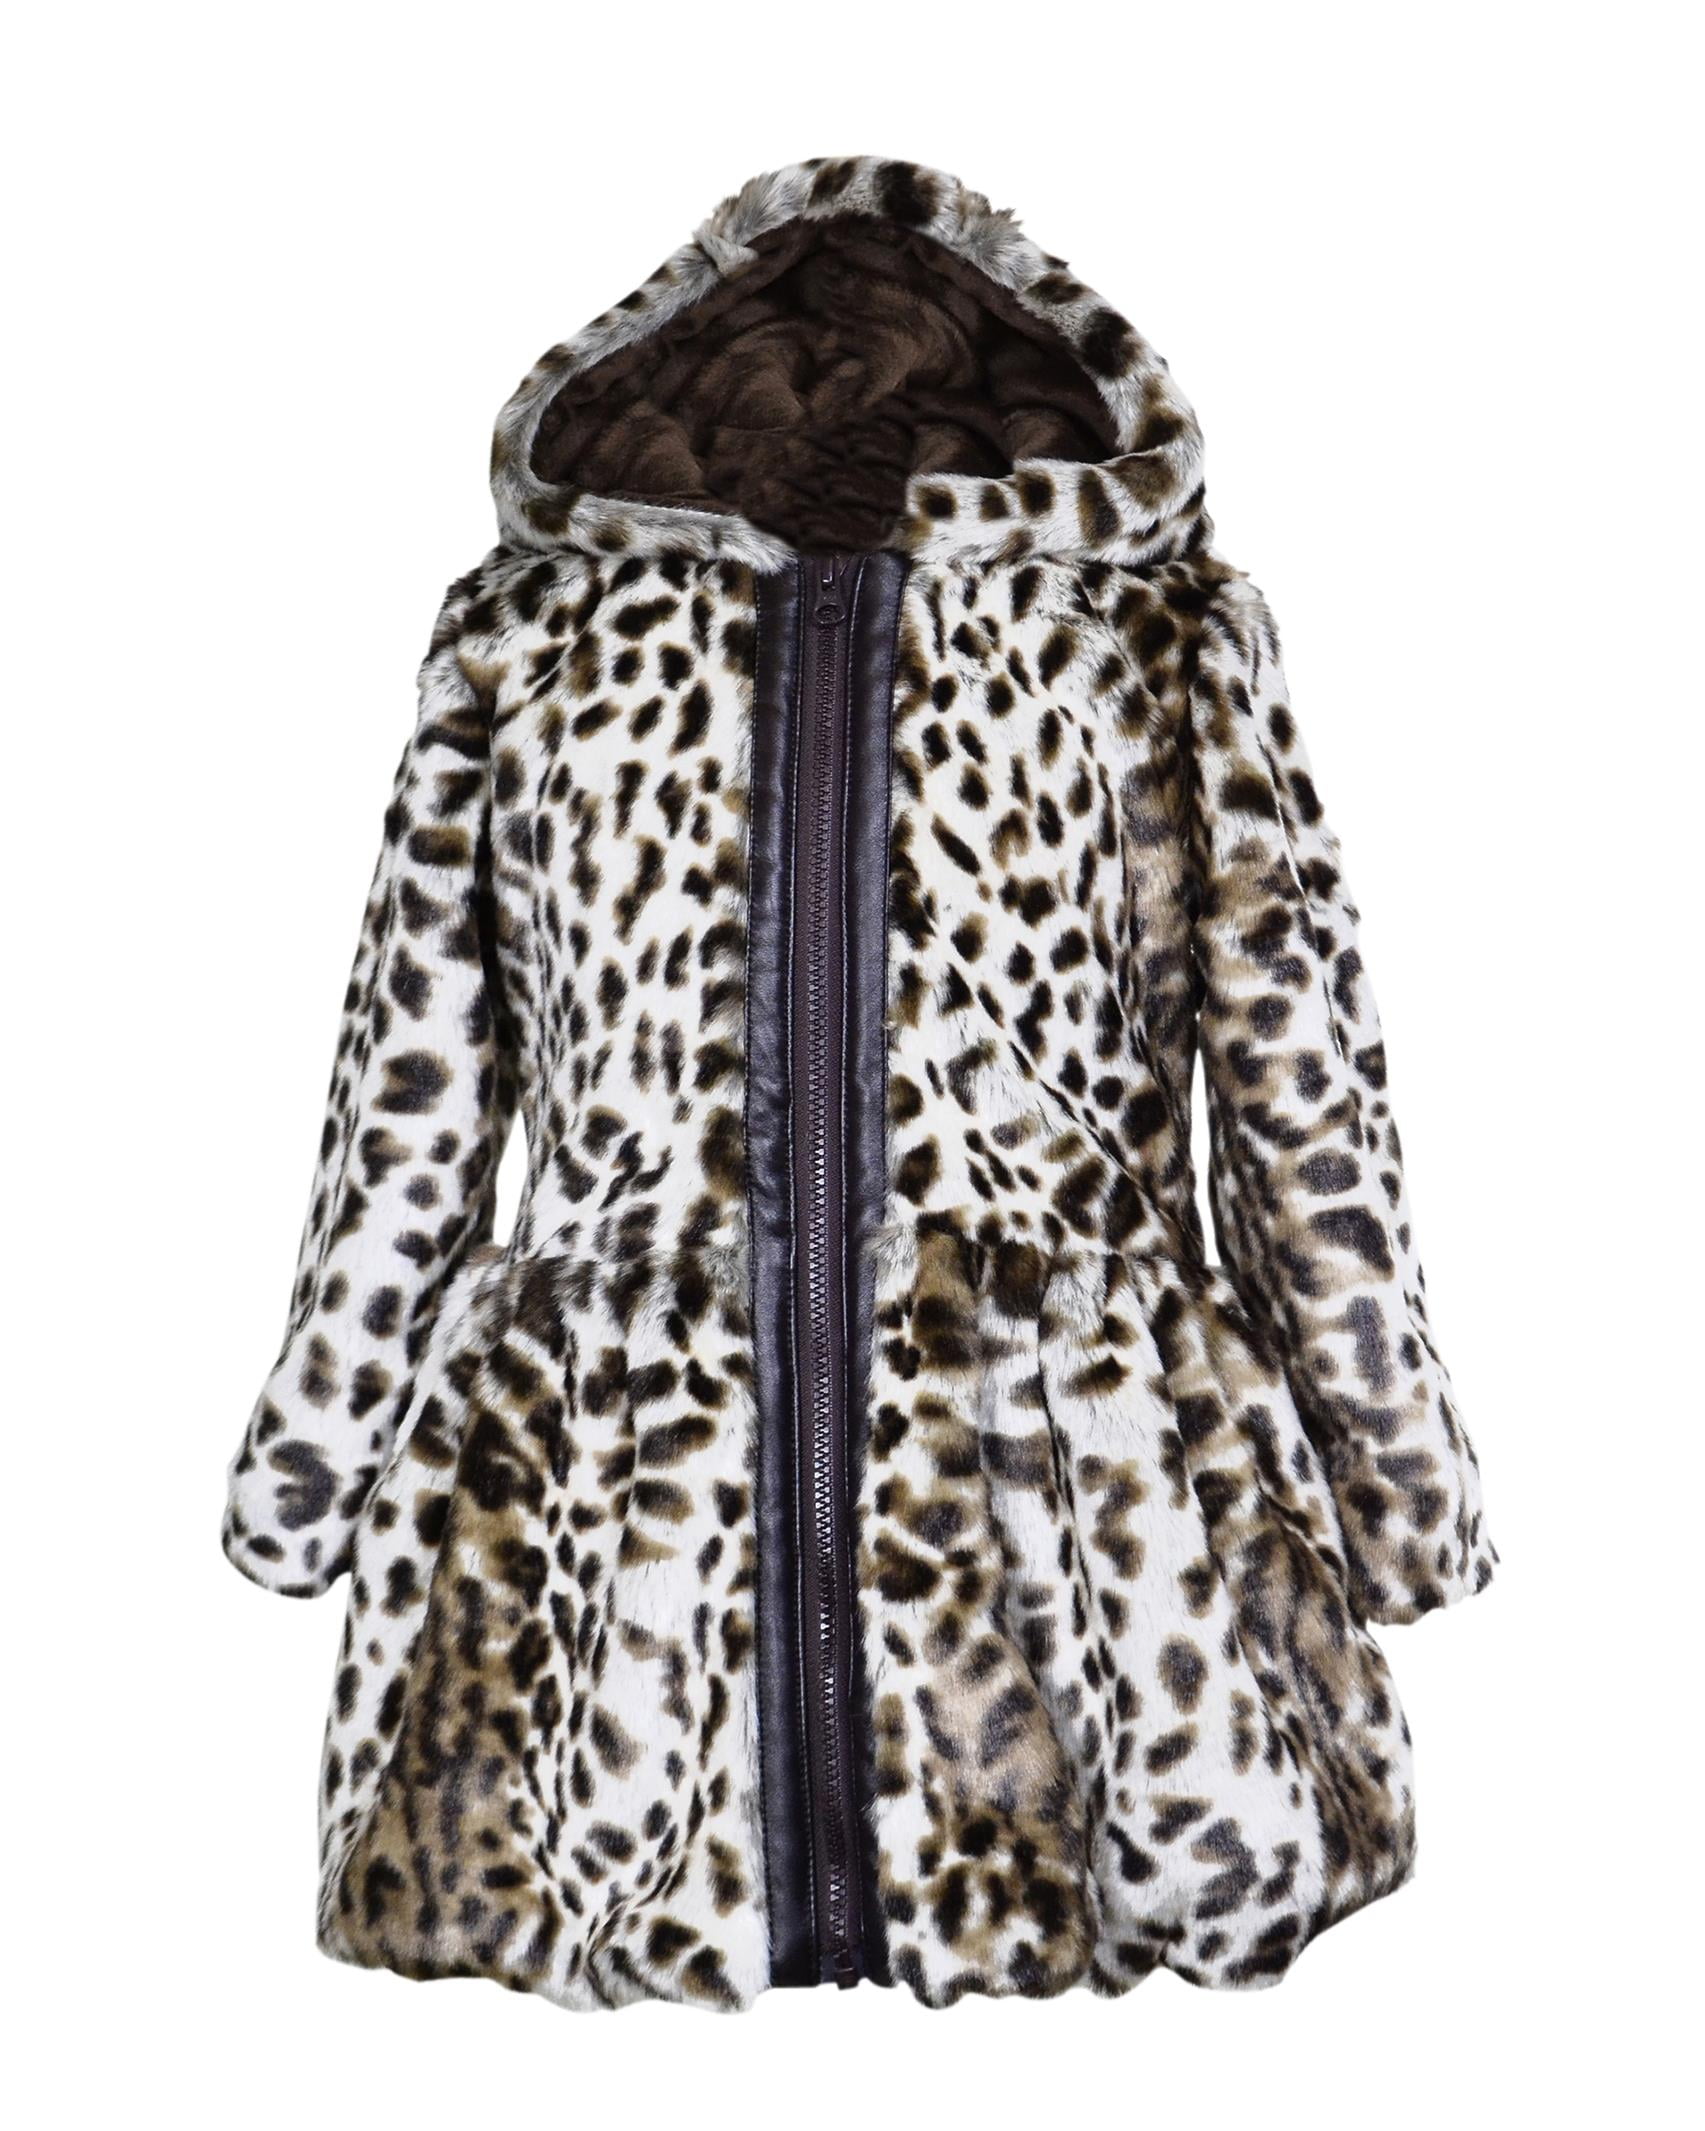 girls coat with fur